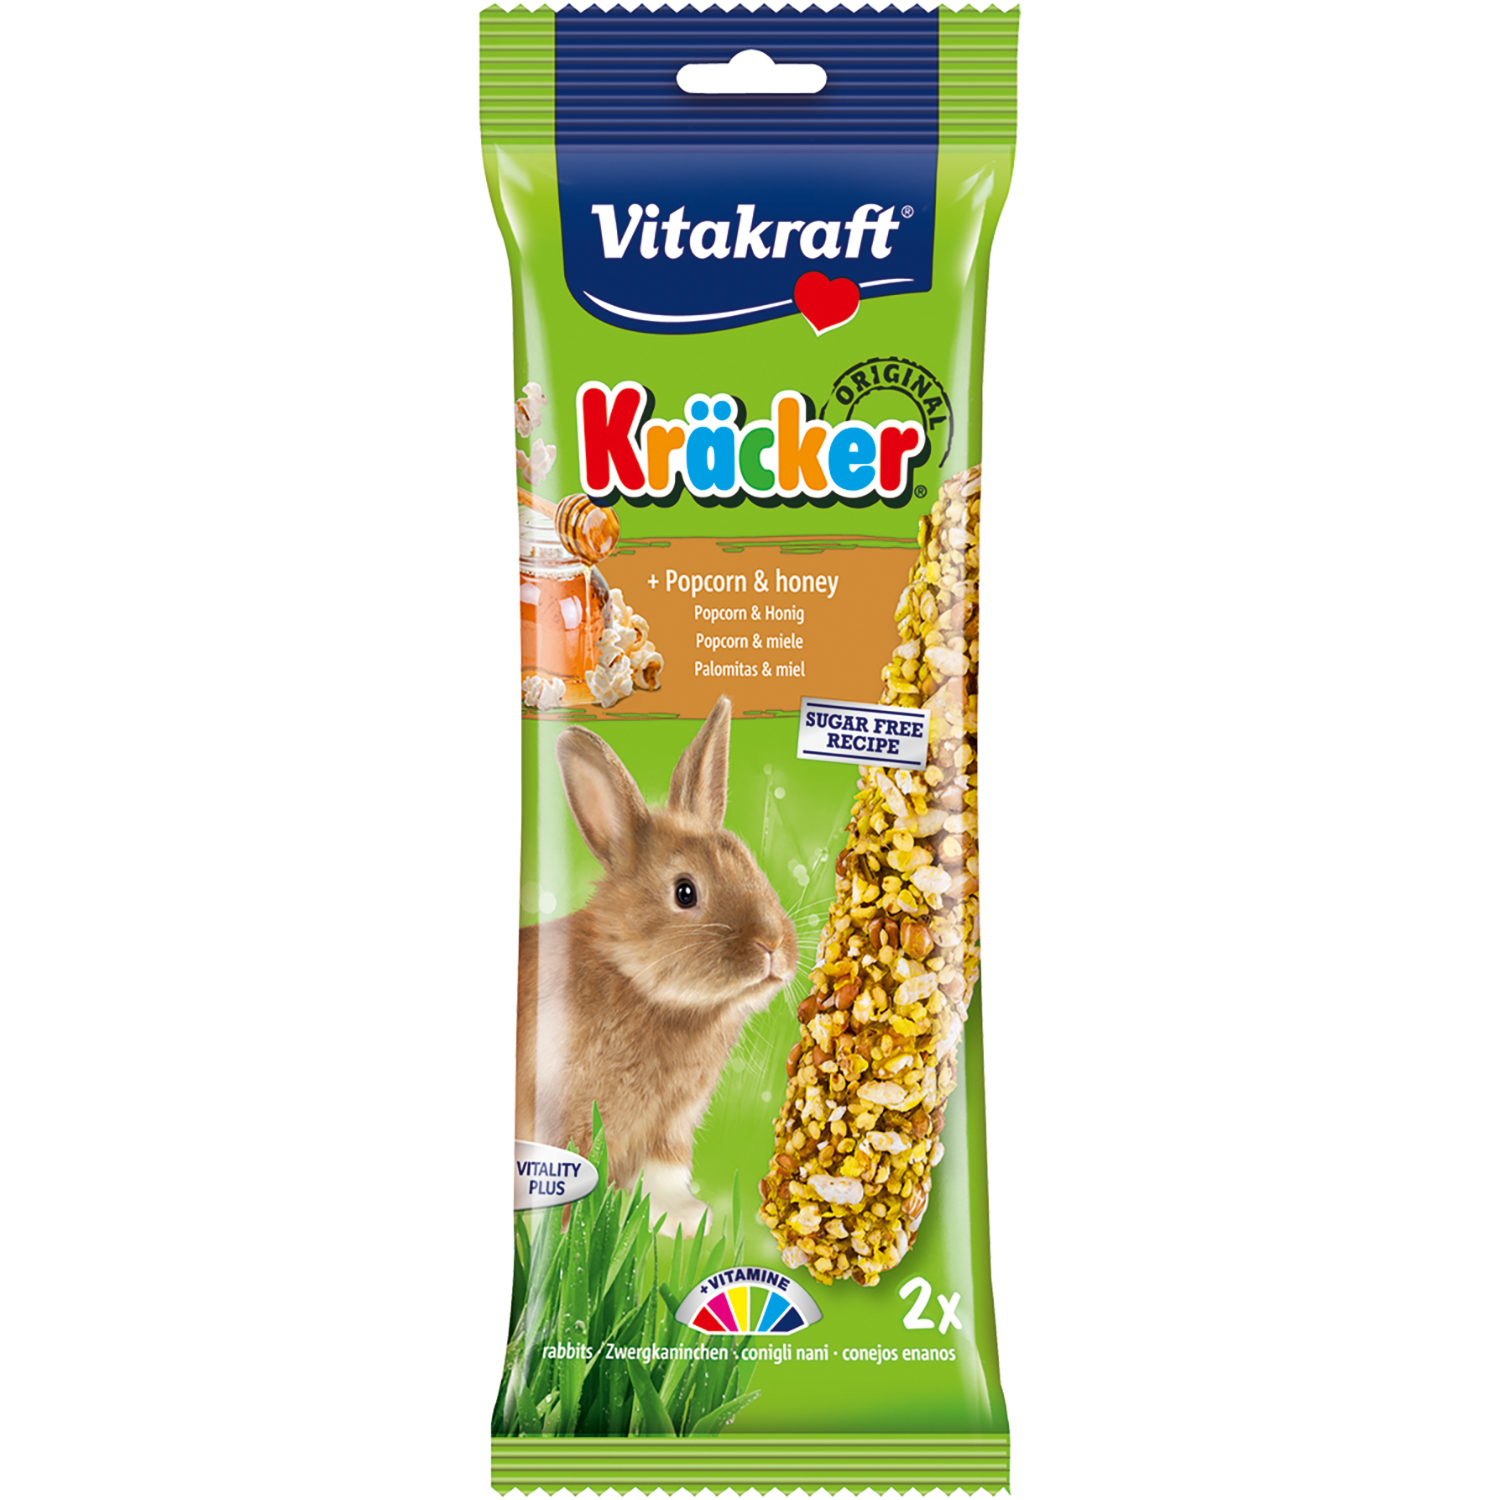 Vitakraft Kracker Small Animal Popcorn and Honey Stick Treat 2 Pack Image